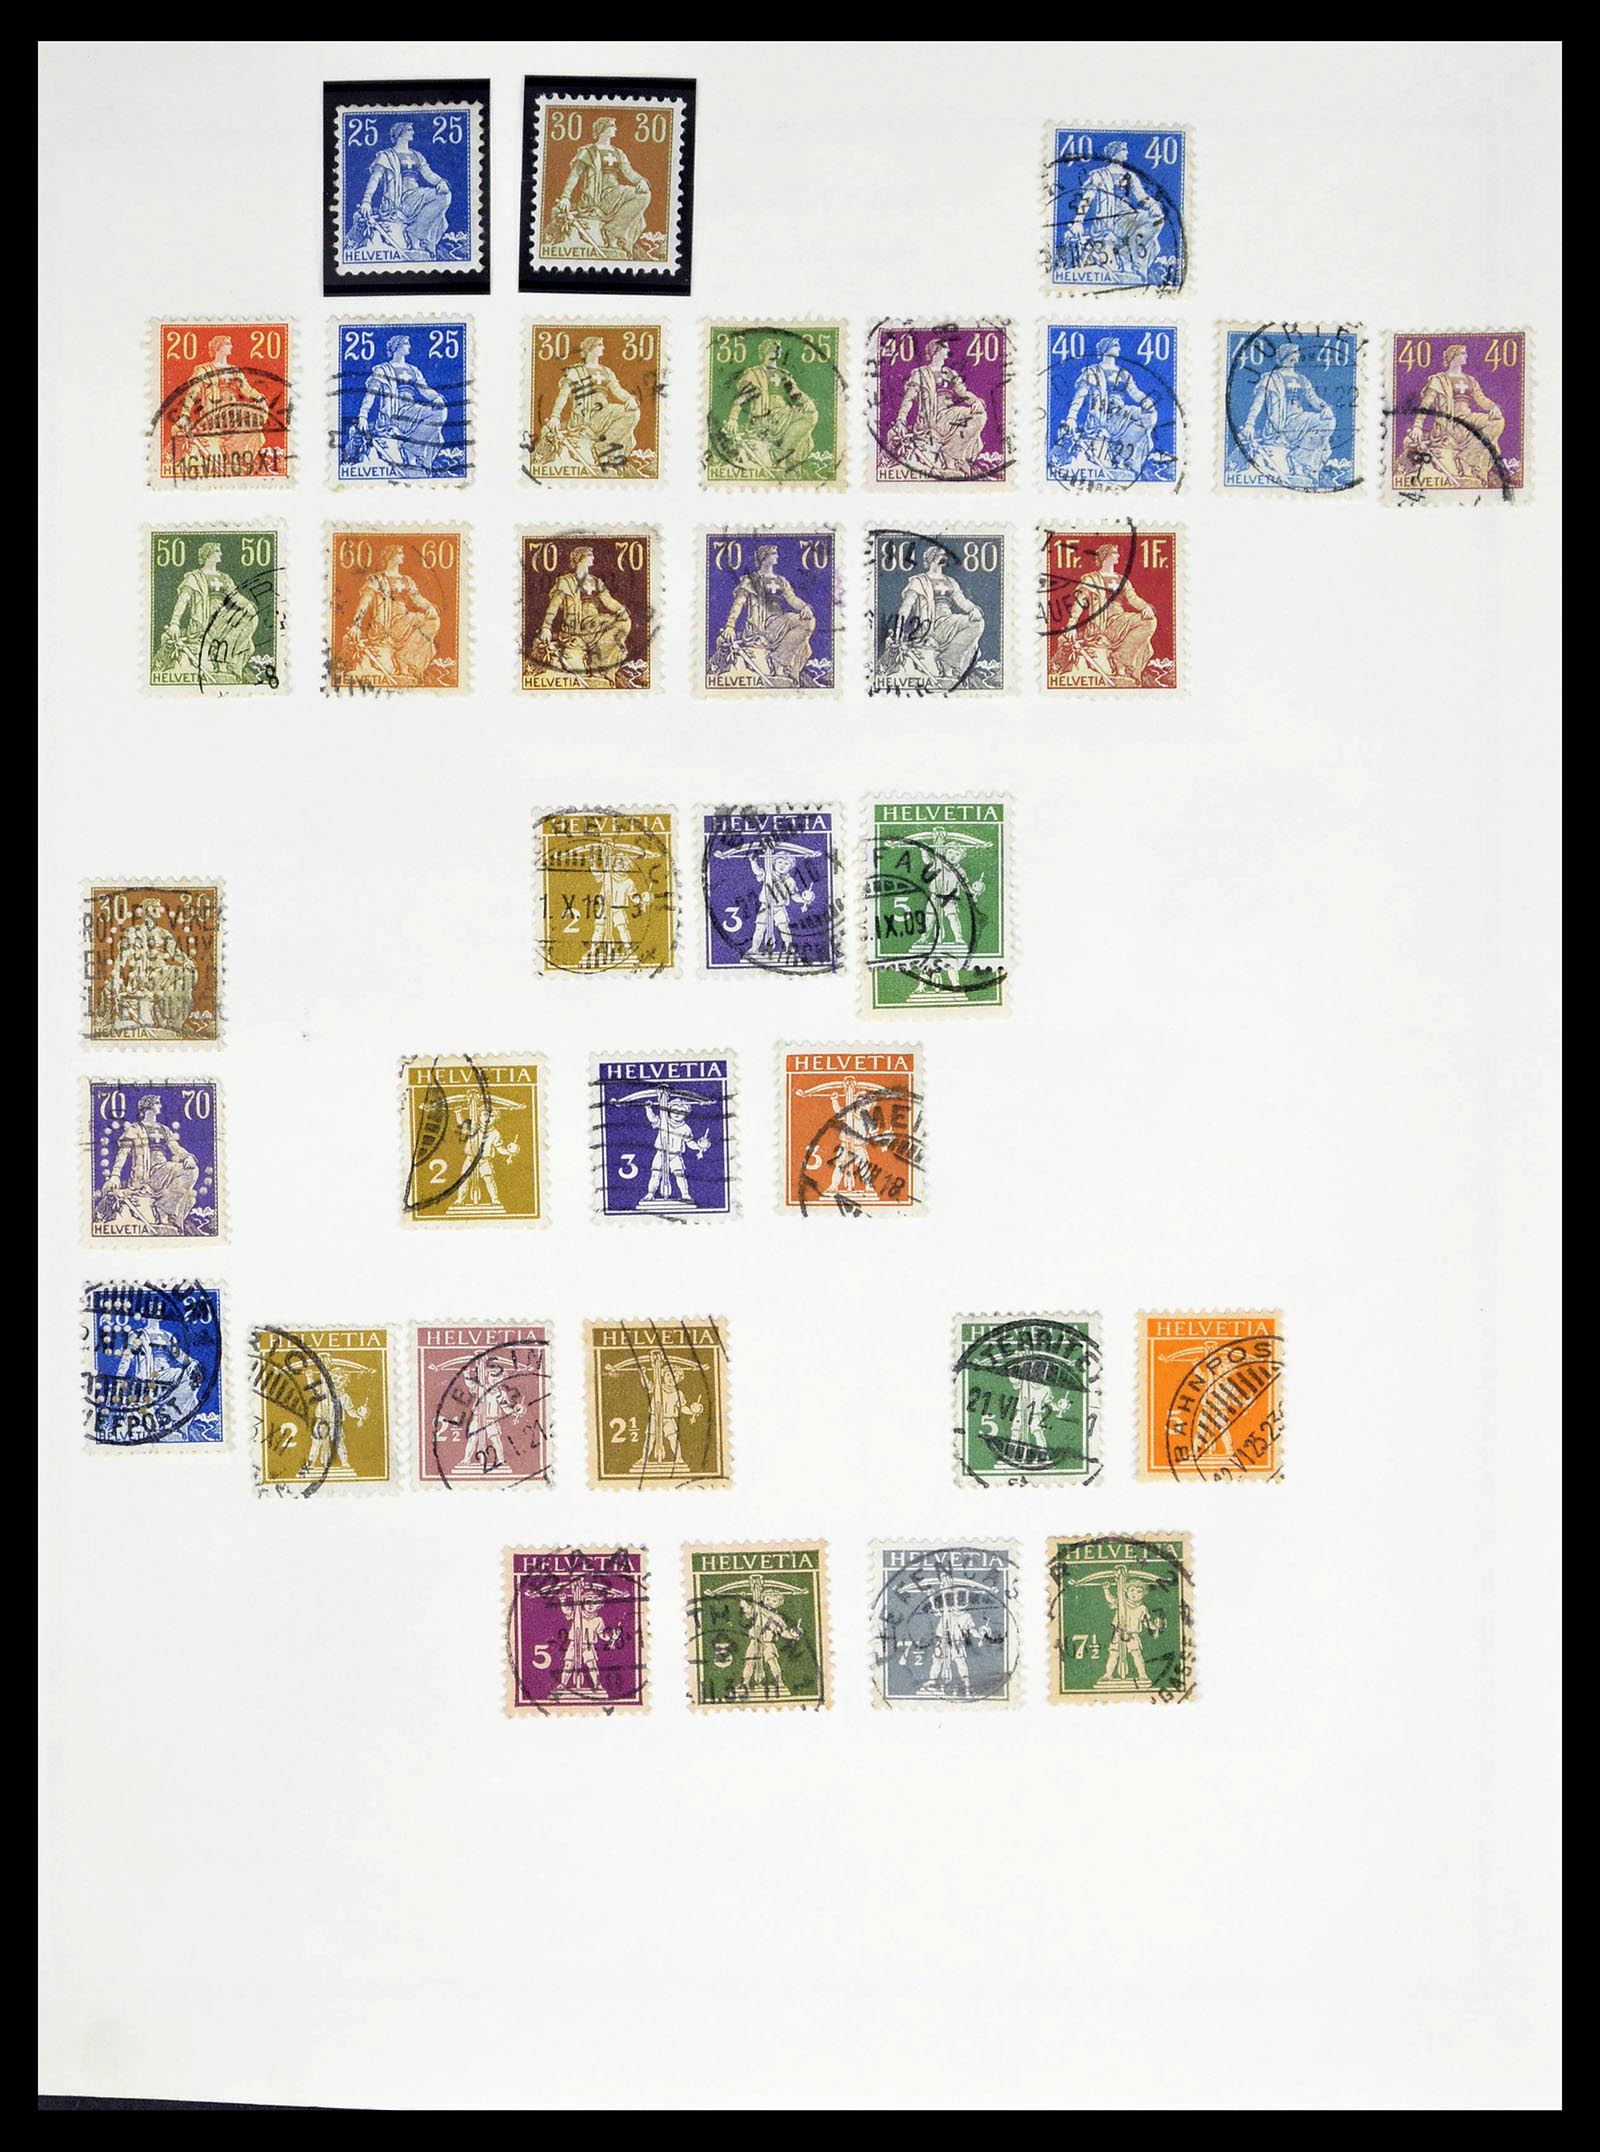 39178 0010 - Stamp collection 39178 Switzerland 1850-1989.